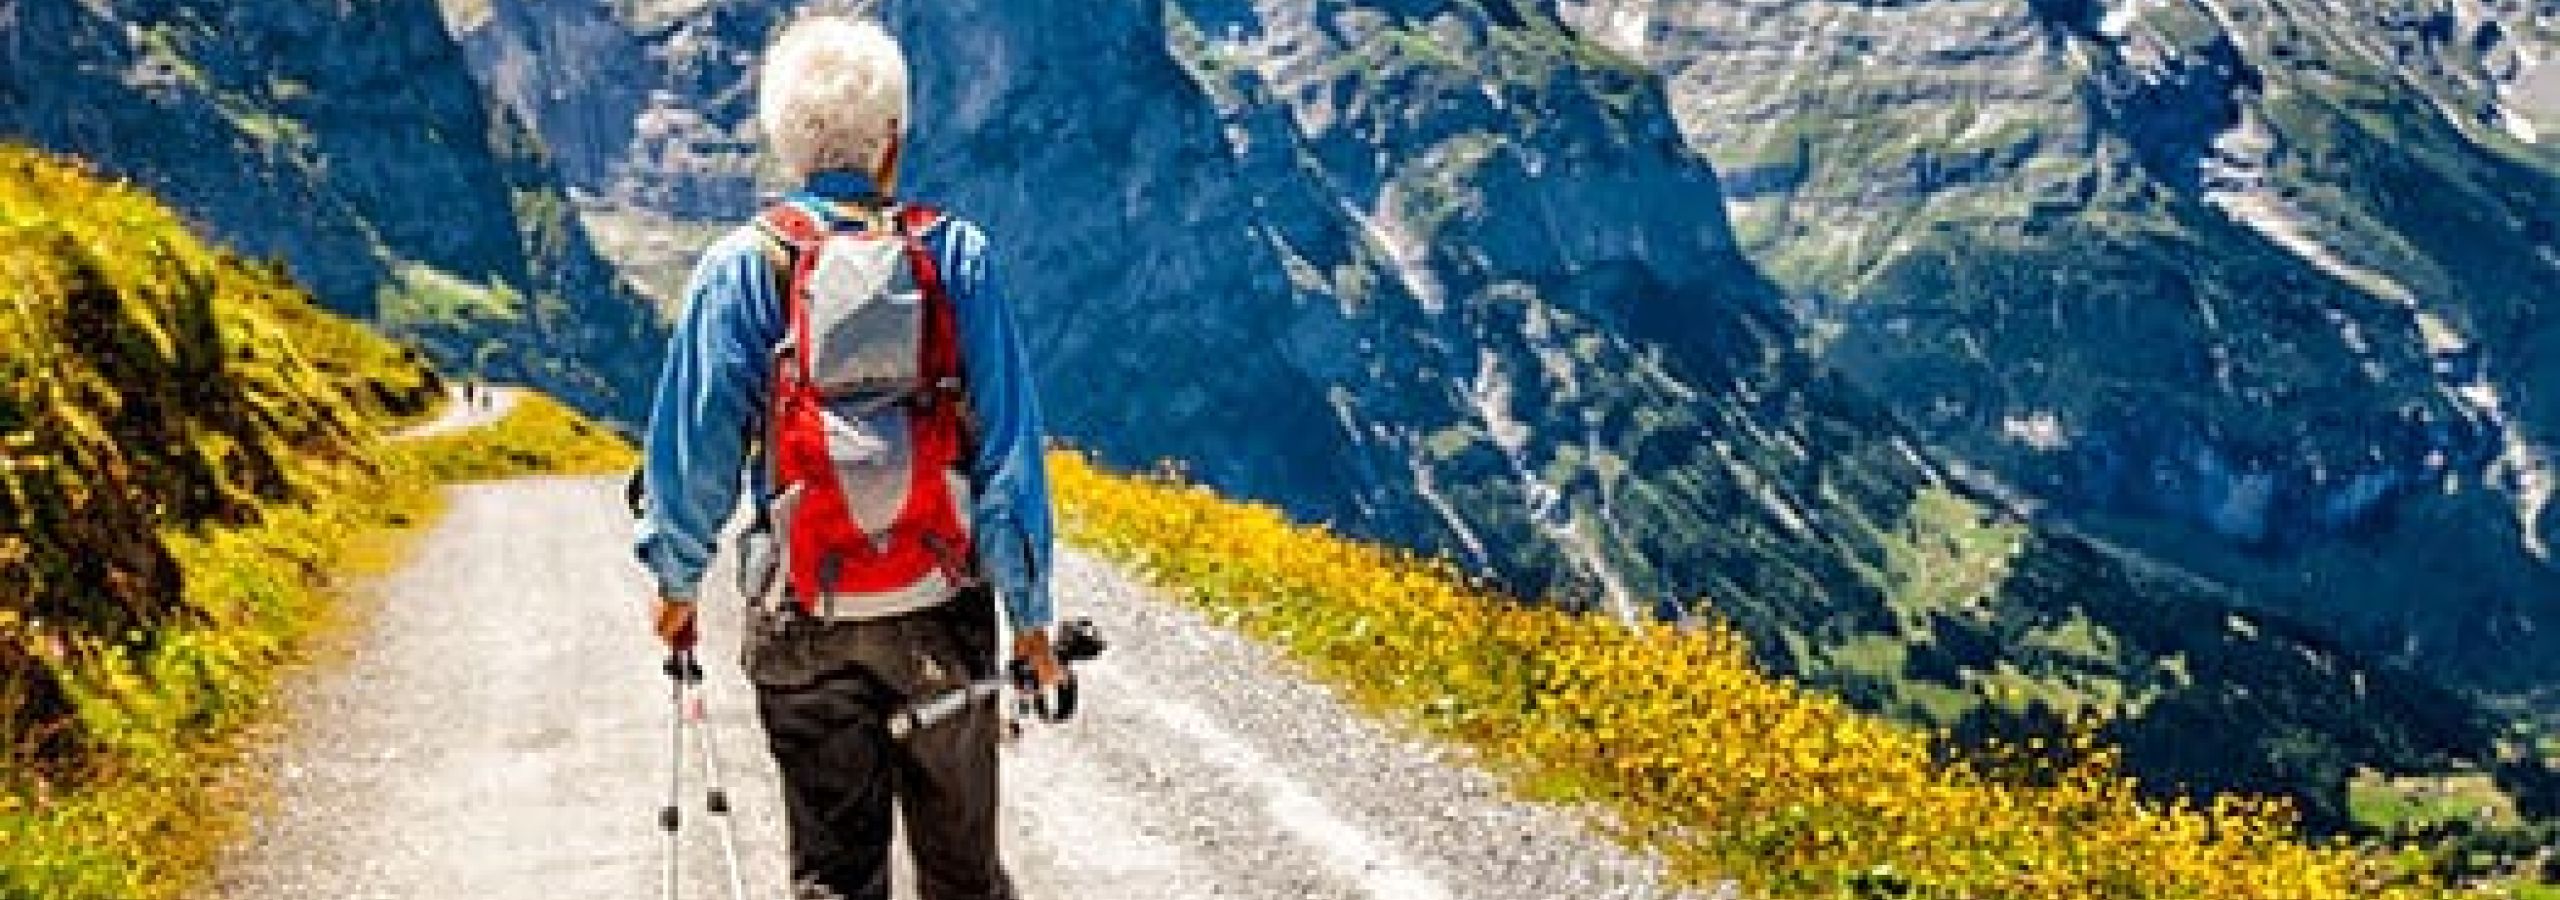 ageing elderly hiker